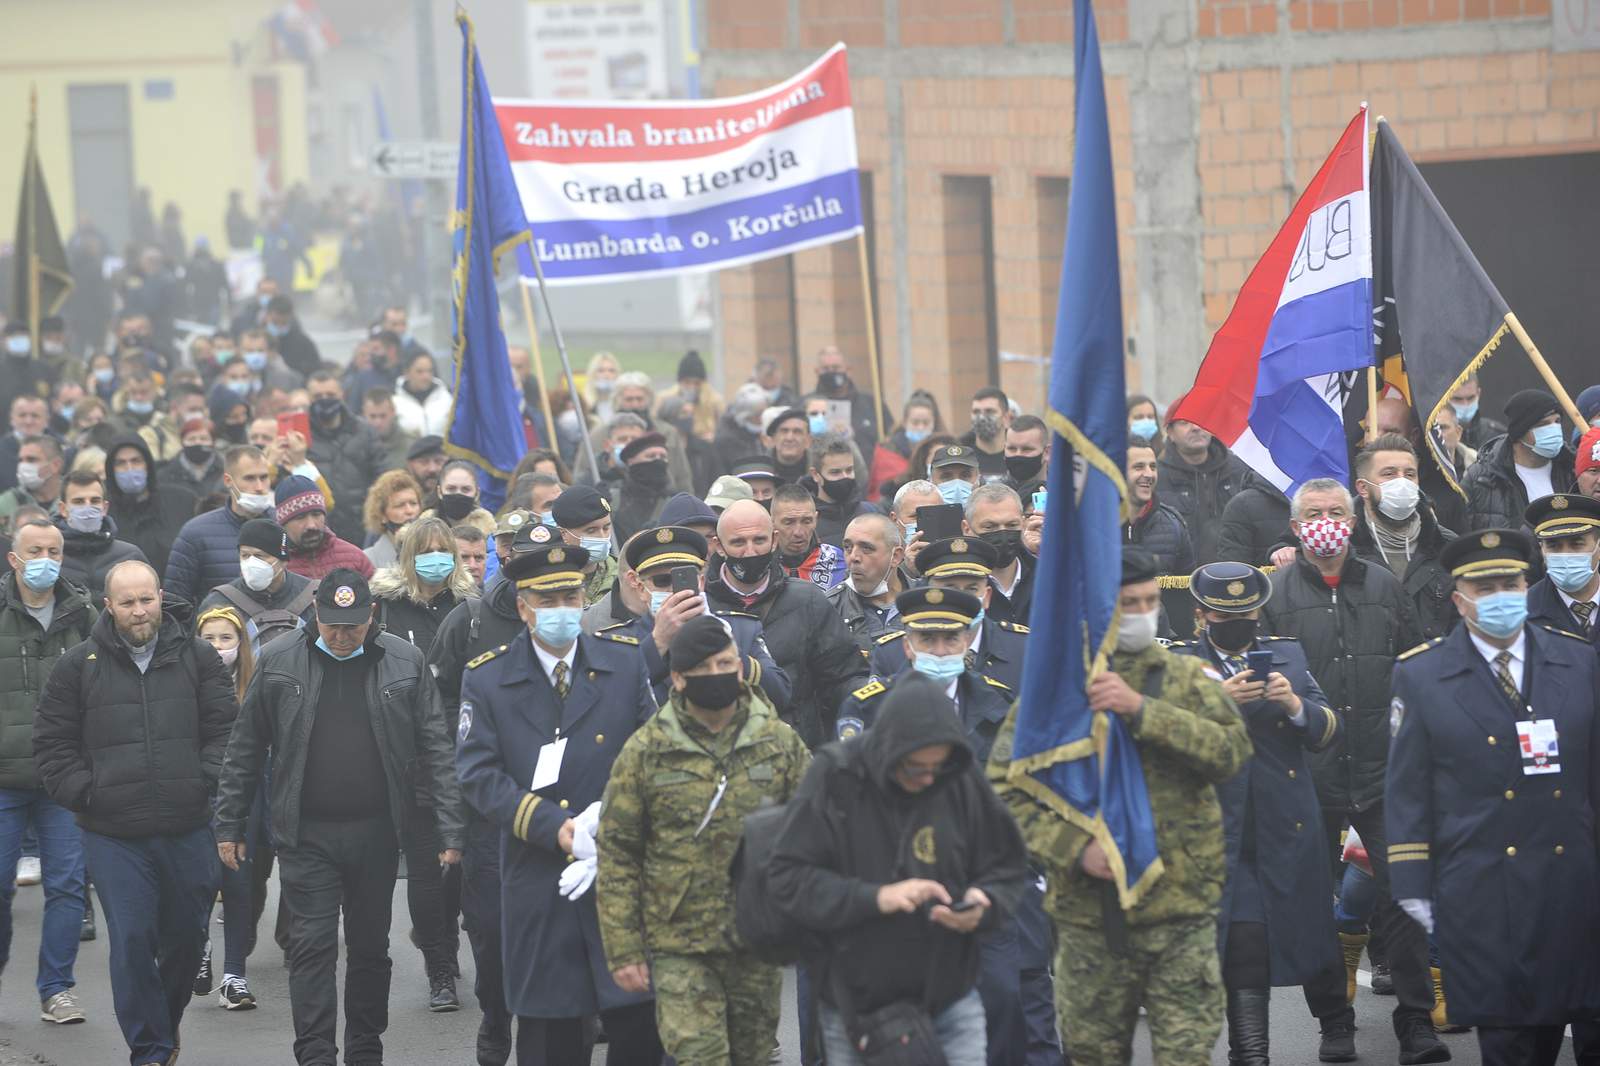 Thousands march in Croatia to honor war city despite virus